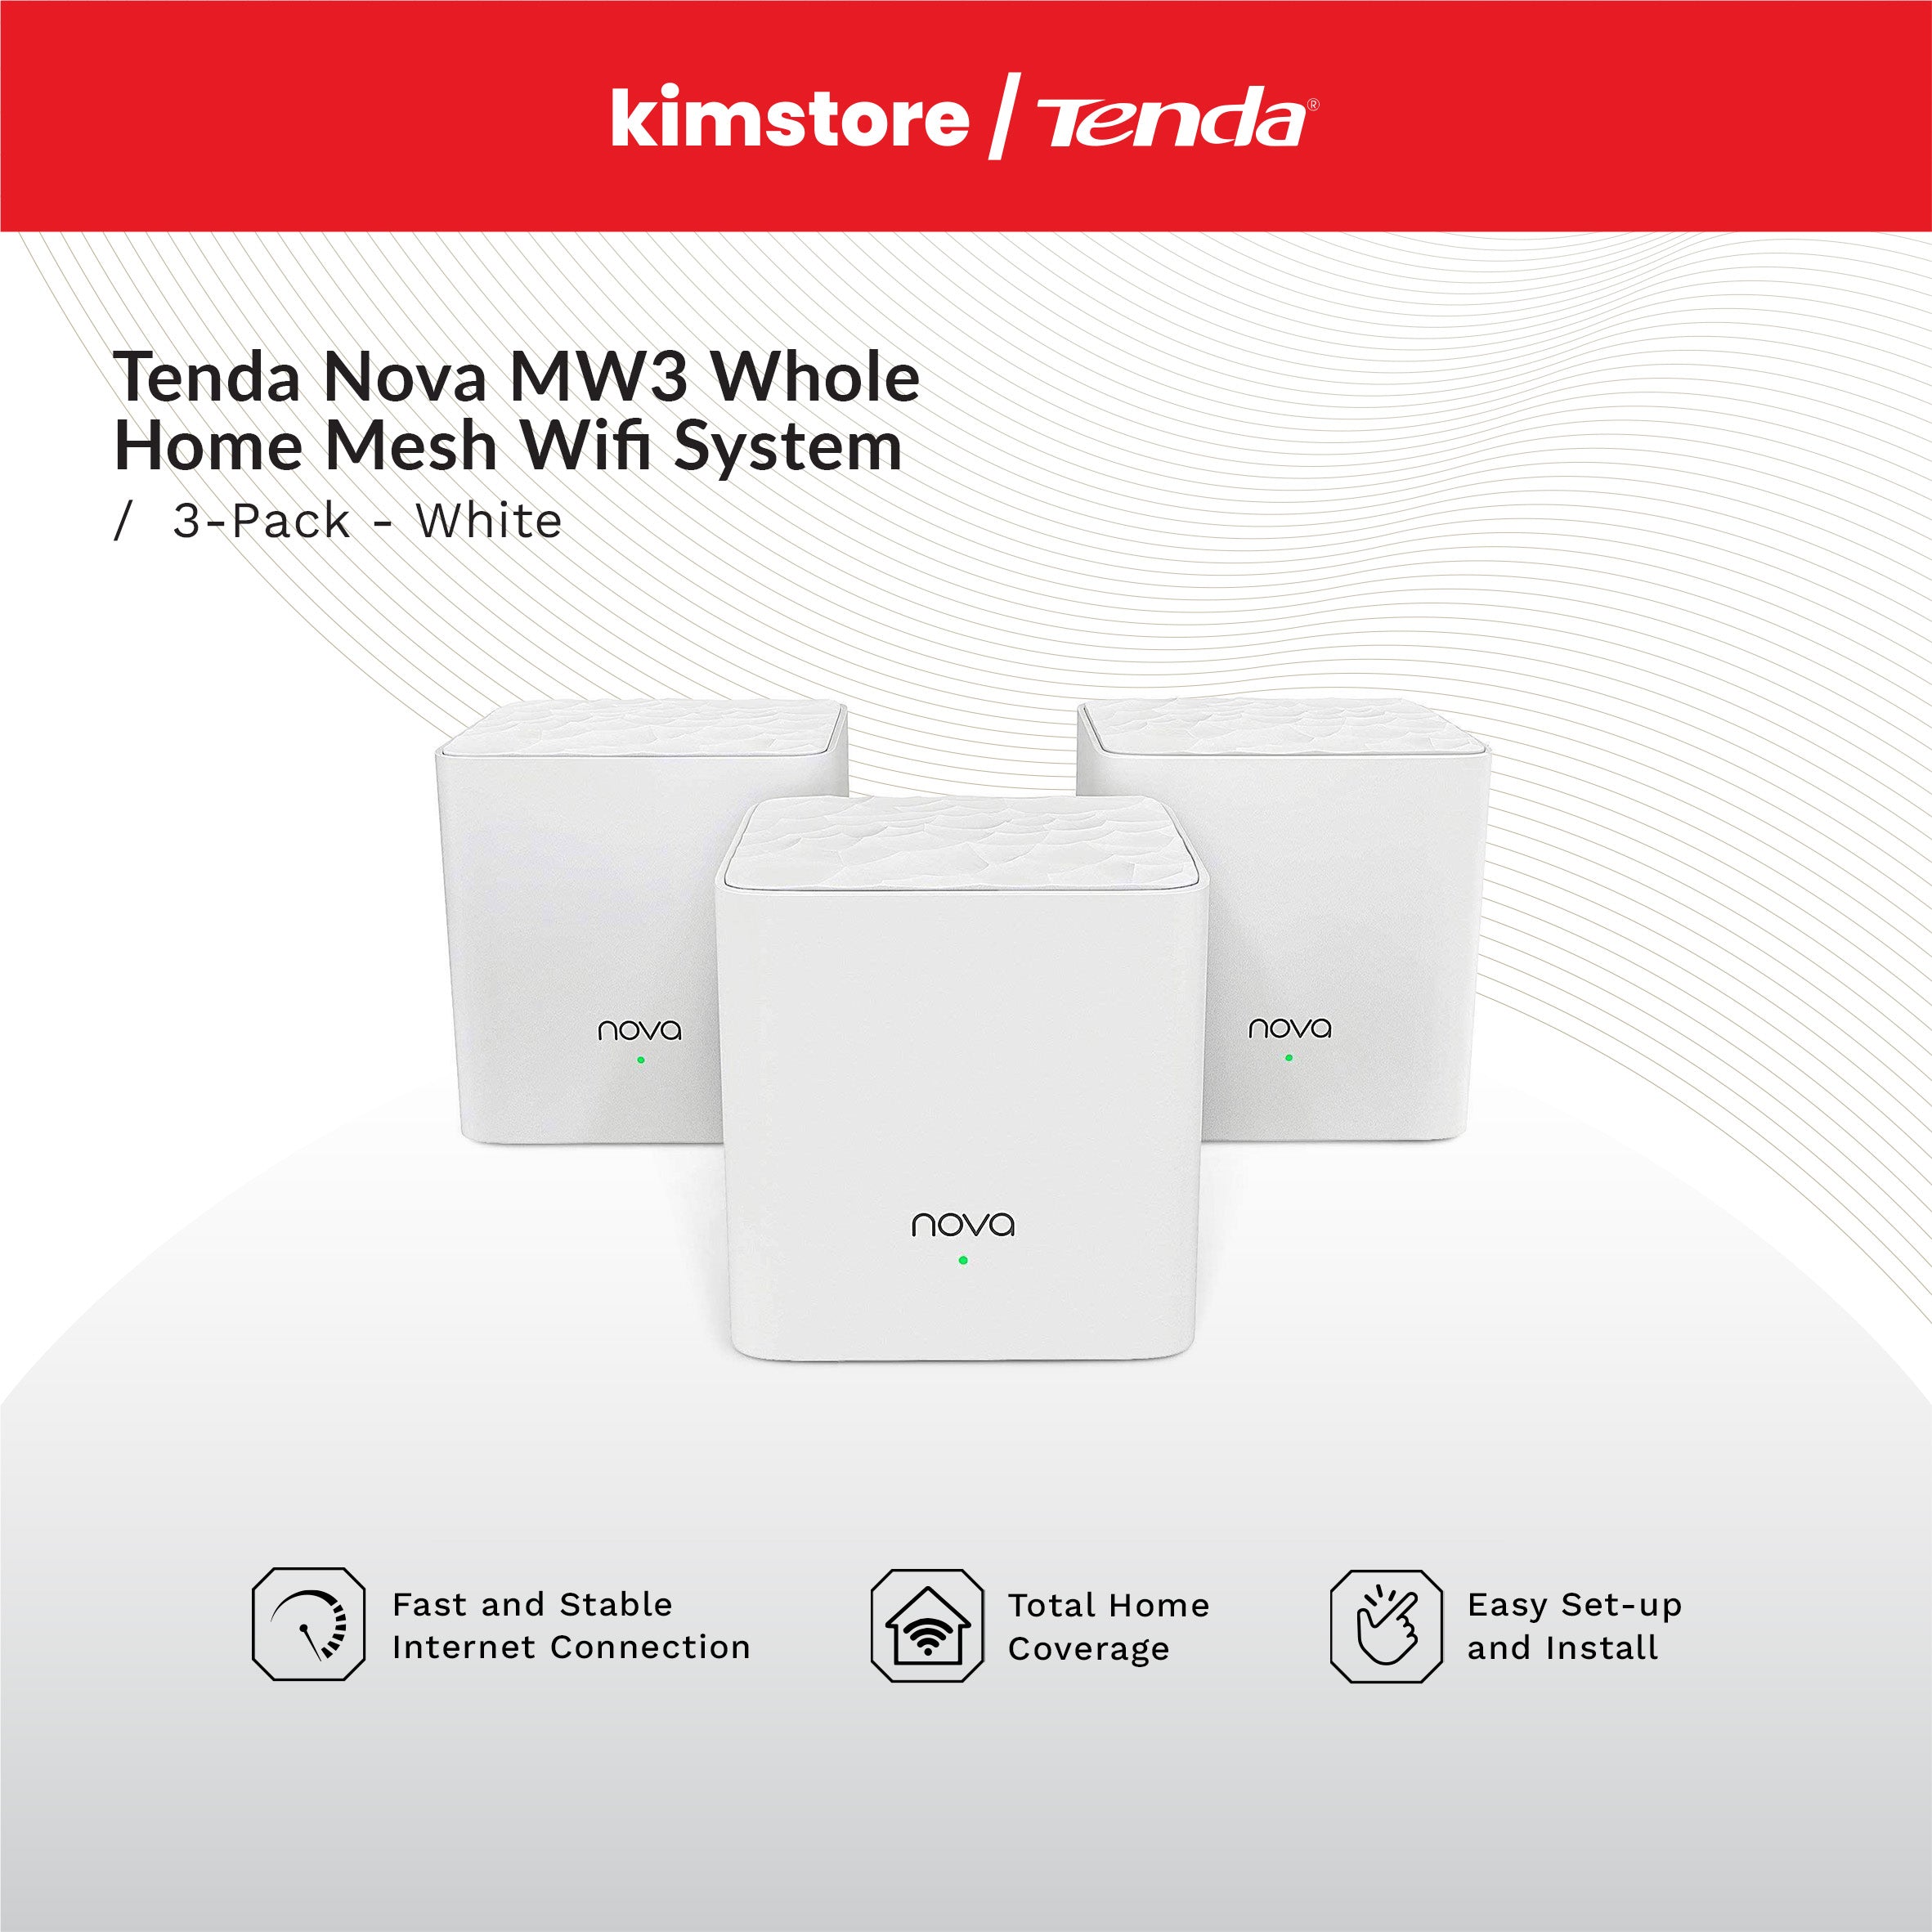 TENDA Nova MW3 Whole Home Mesh WiFi System 3-Pack – KIMSTORE